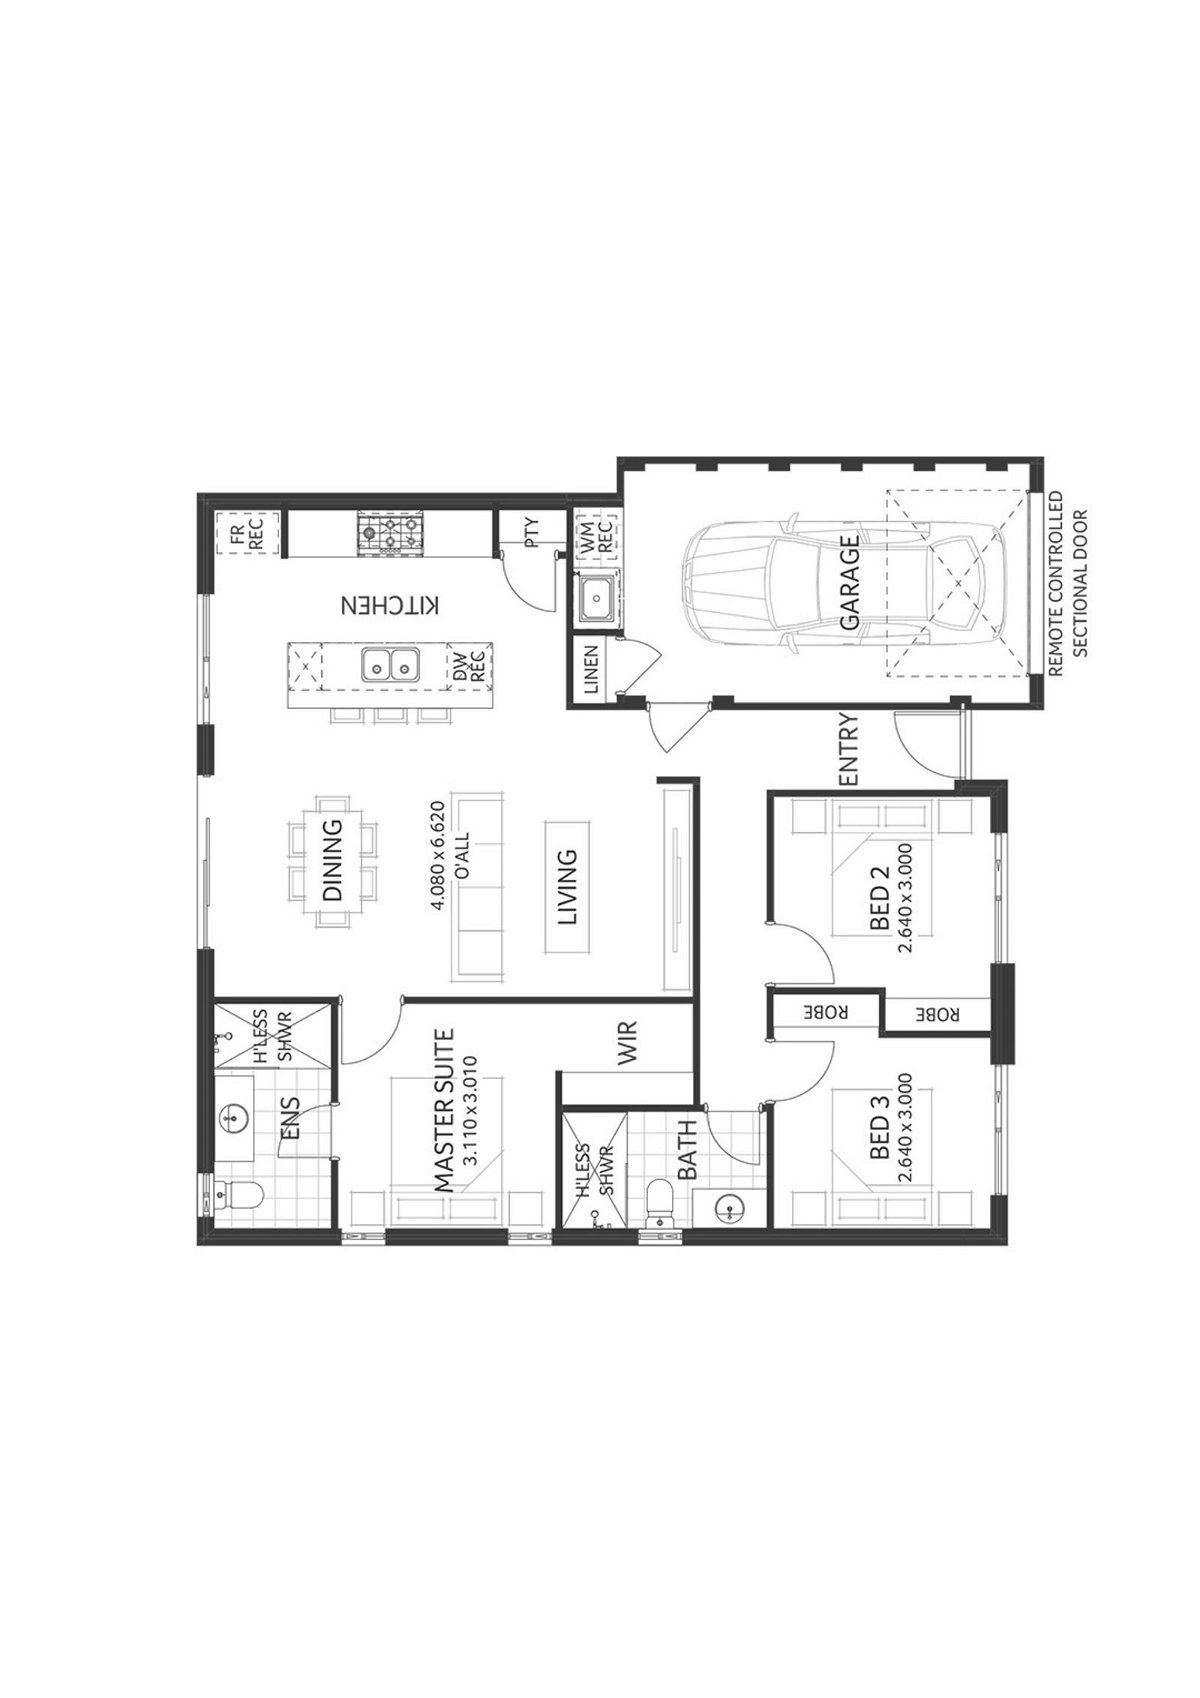 Plunkett Homes -  - Floorplan - Sinagra Lifestyle Contemporary Marketing Plan